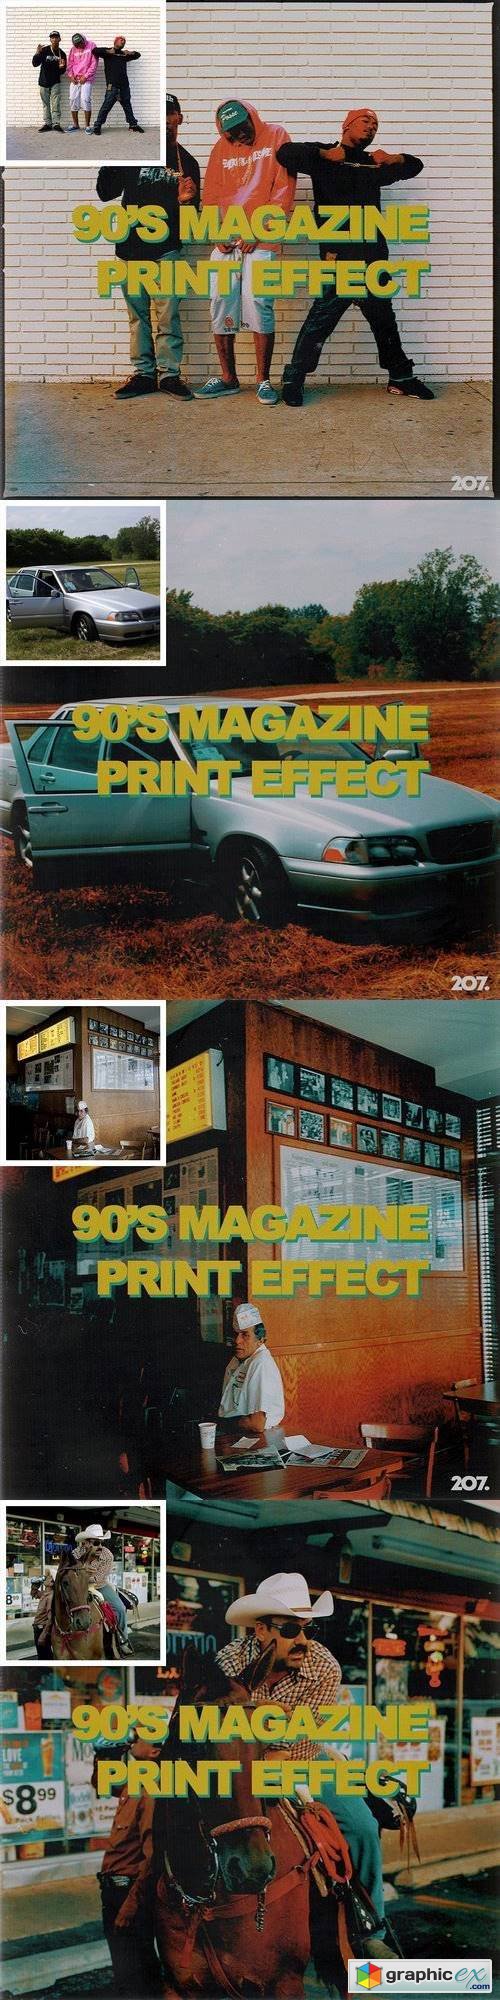 90'S MAGAZINE PRINT EFFECT BY 2?7ART